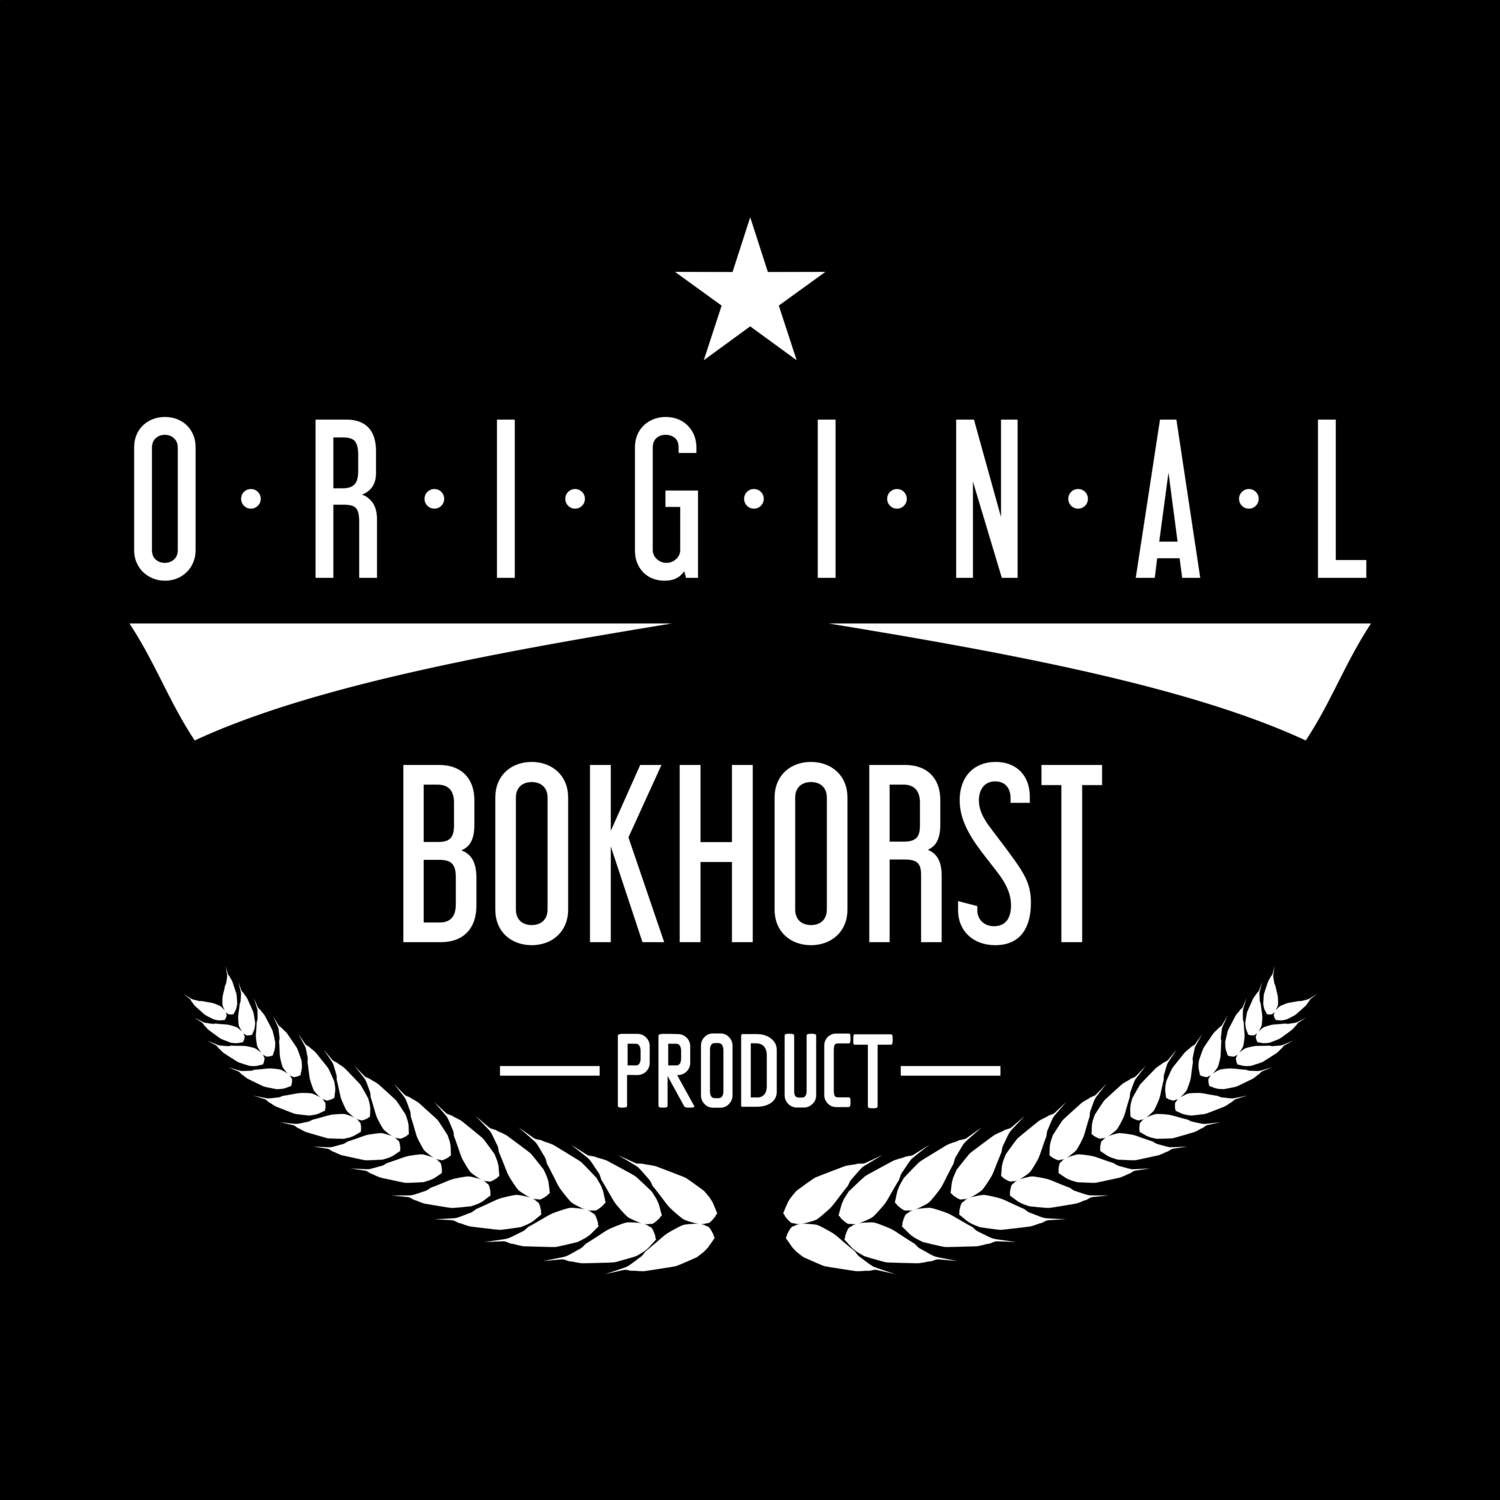 Bokhorst T-Shirt »Original Product«